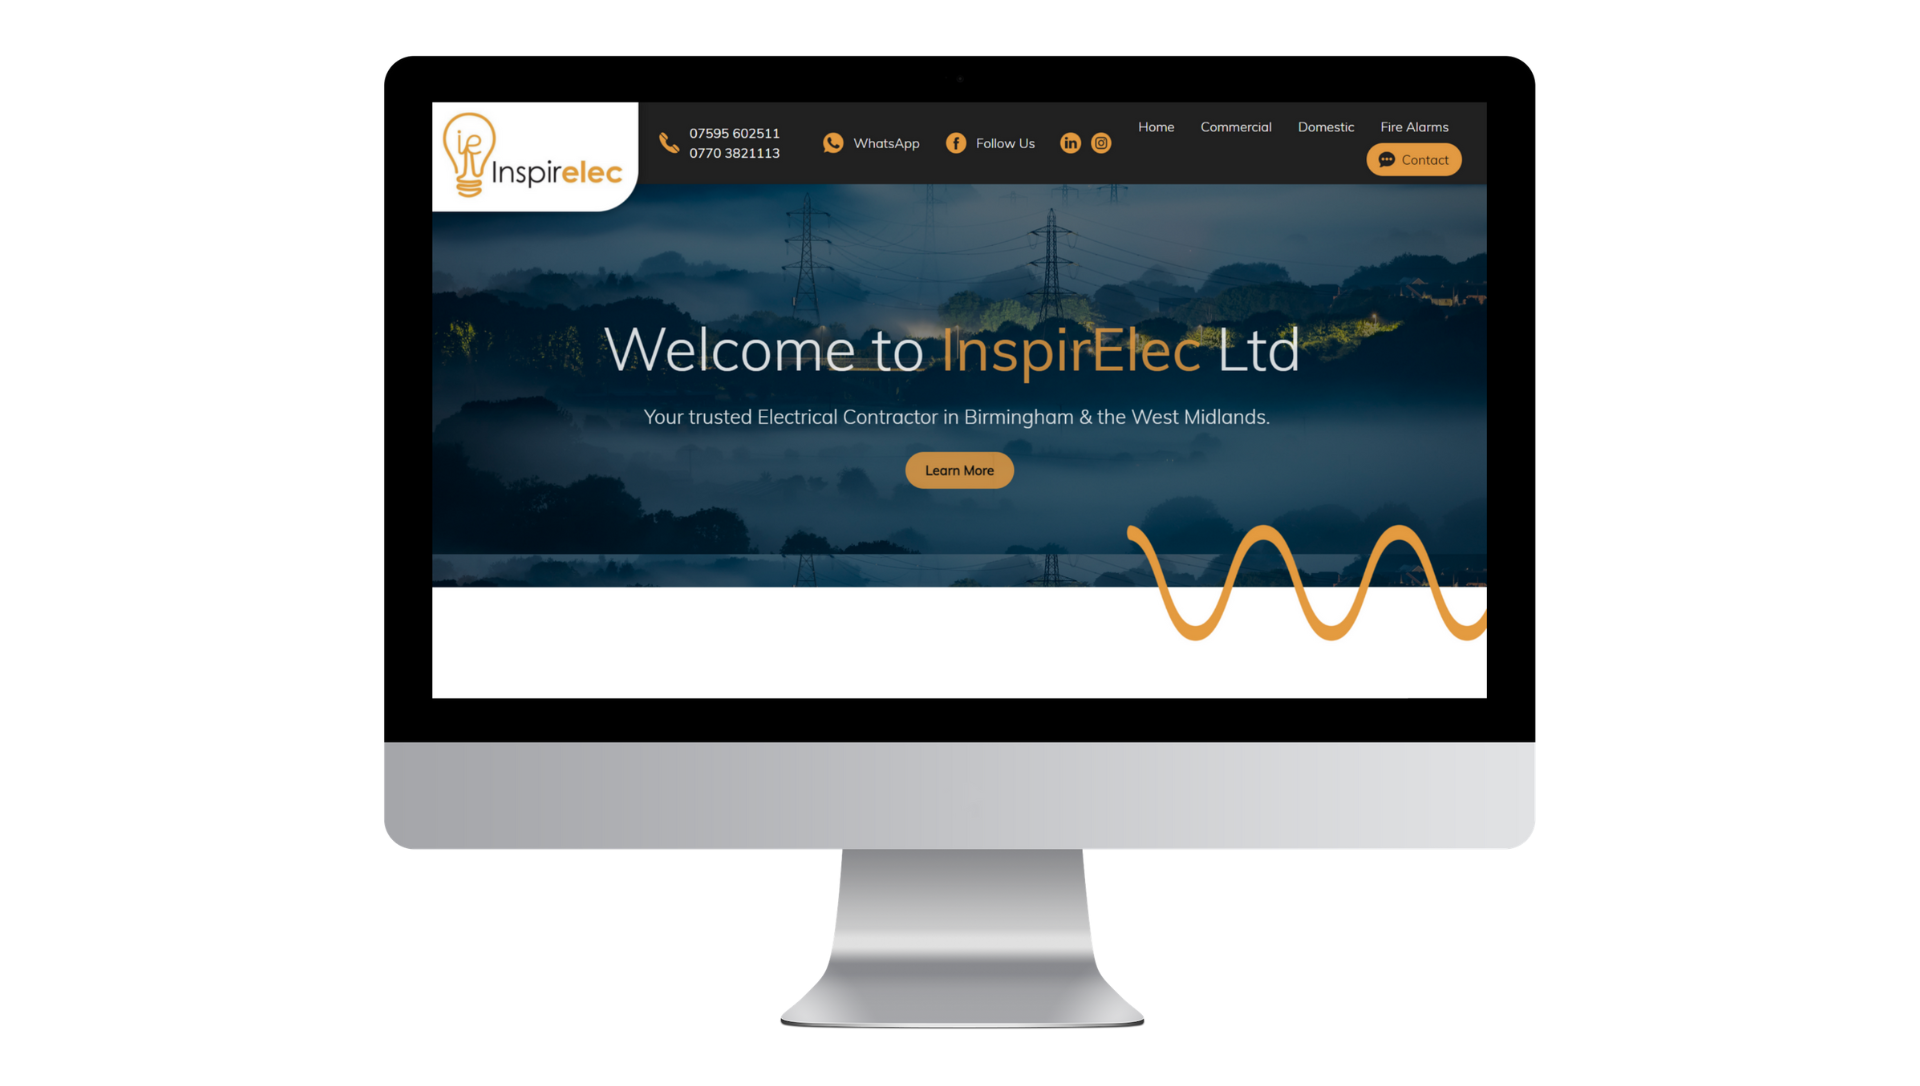 Inspirelec website design shown on a desktop computer with a white background